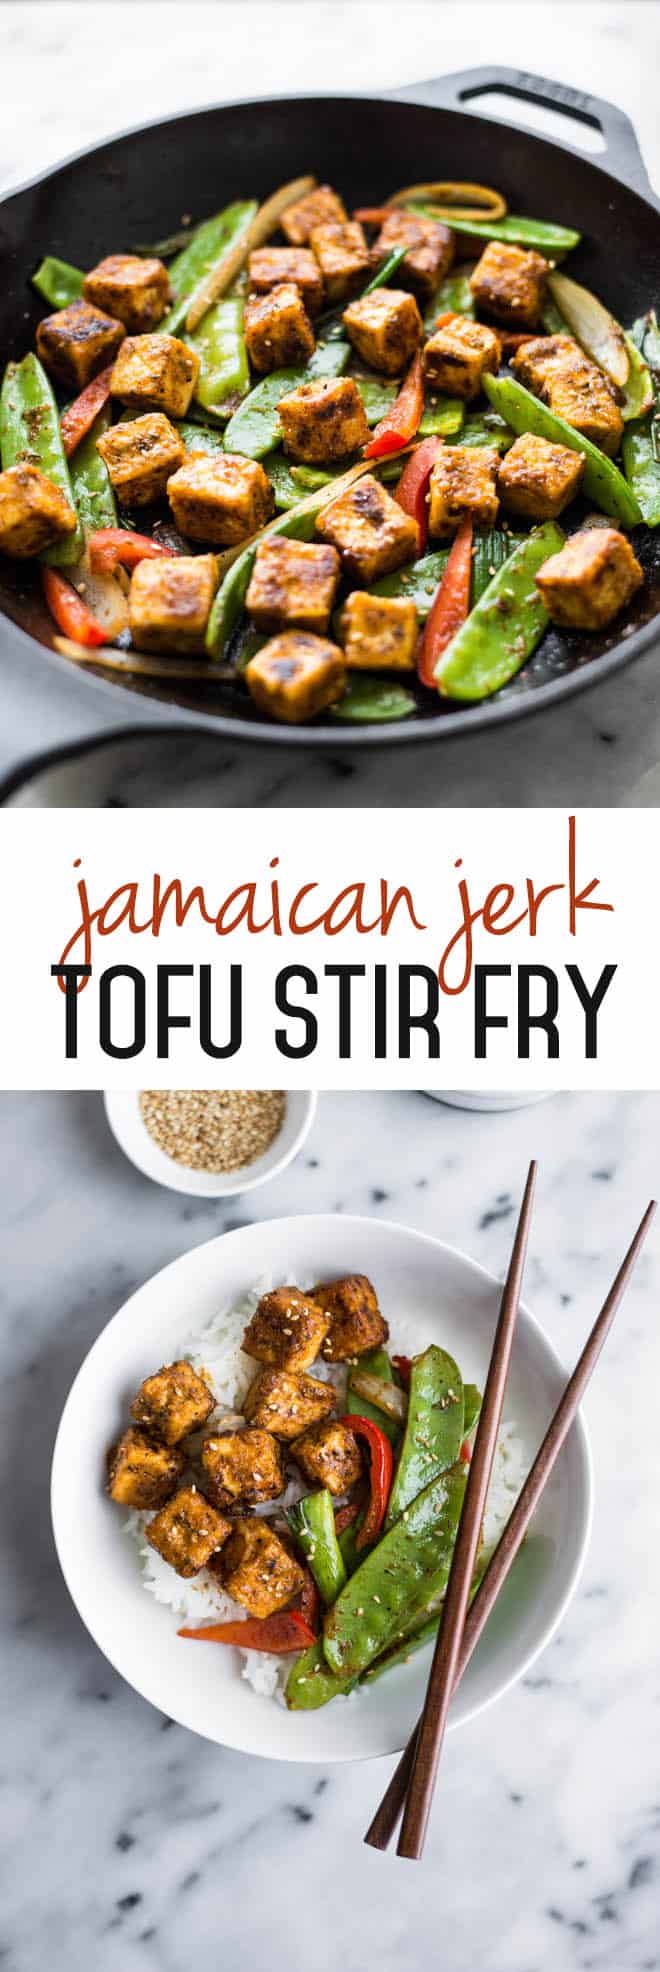 Jamaican Jerk Tofu Stir Fry - easy vegan meal that is full of spice! by Lisa Lin of healthynibblesandbits.com